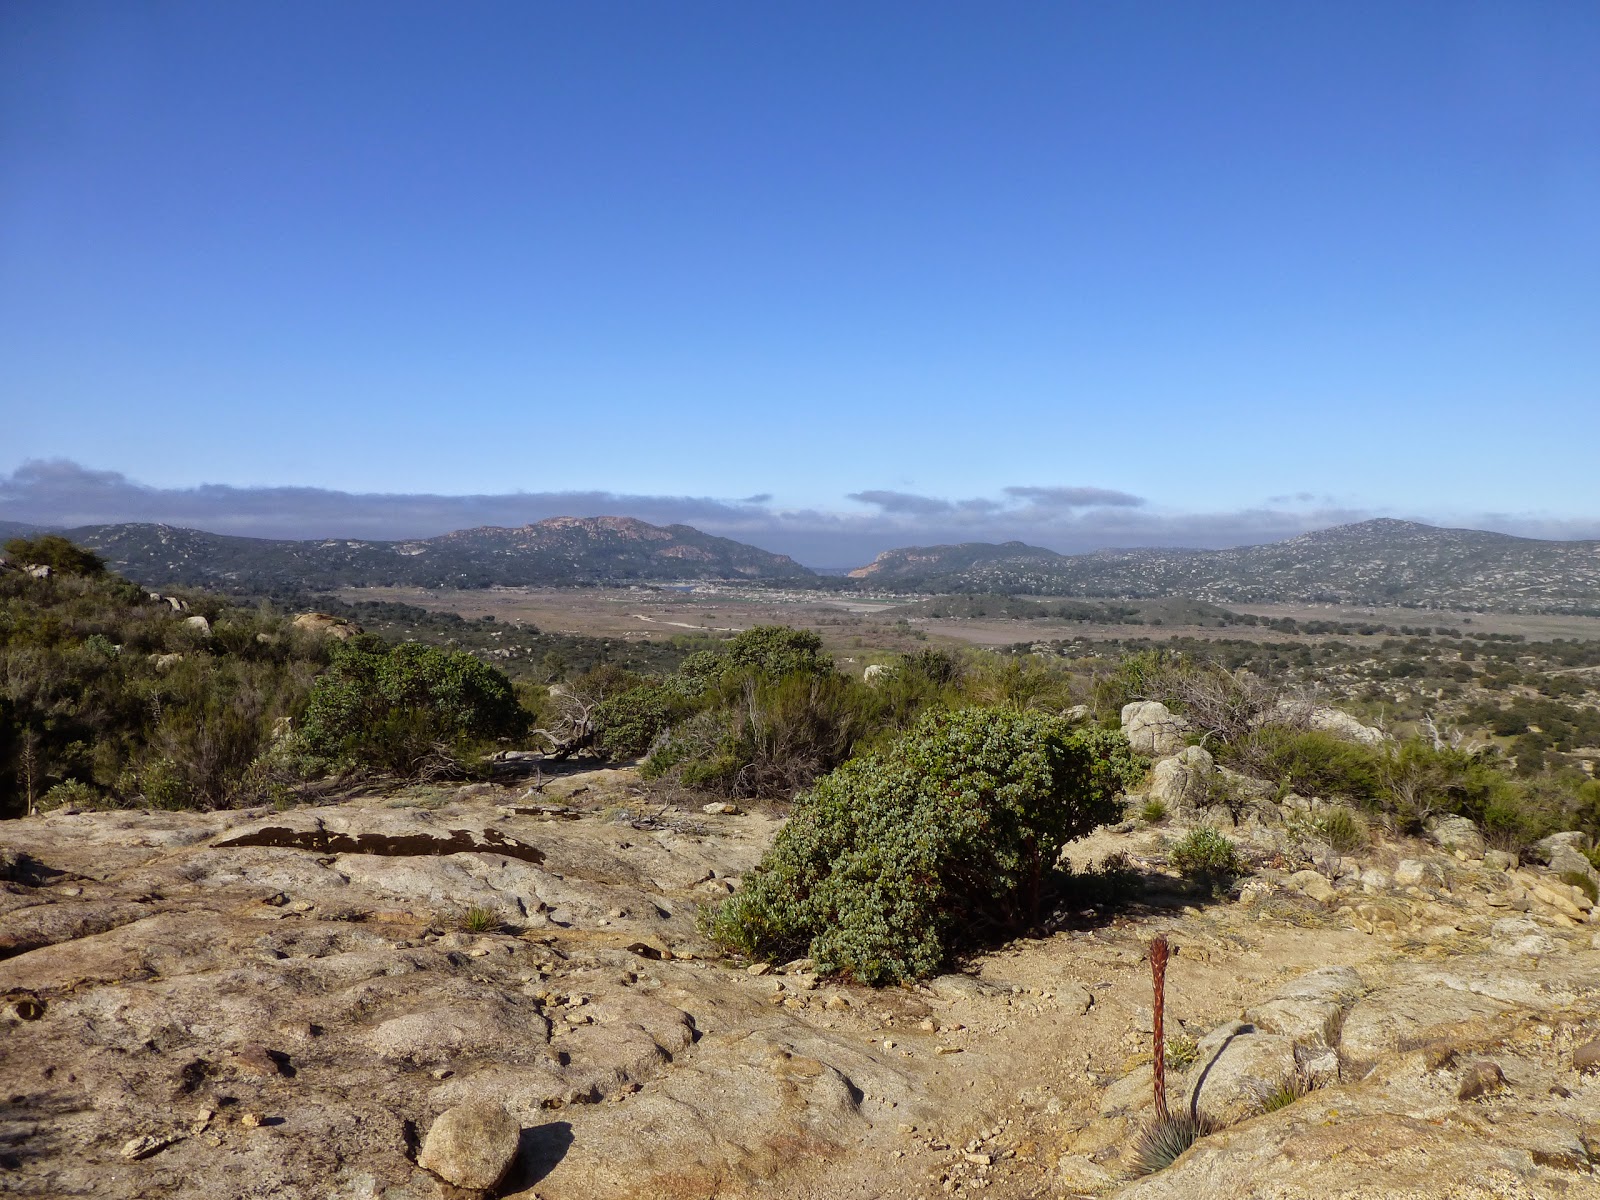 View back towards Lake Morena